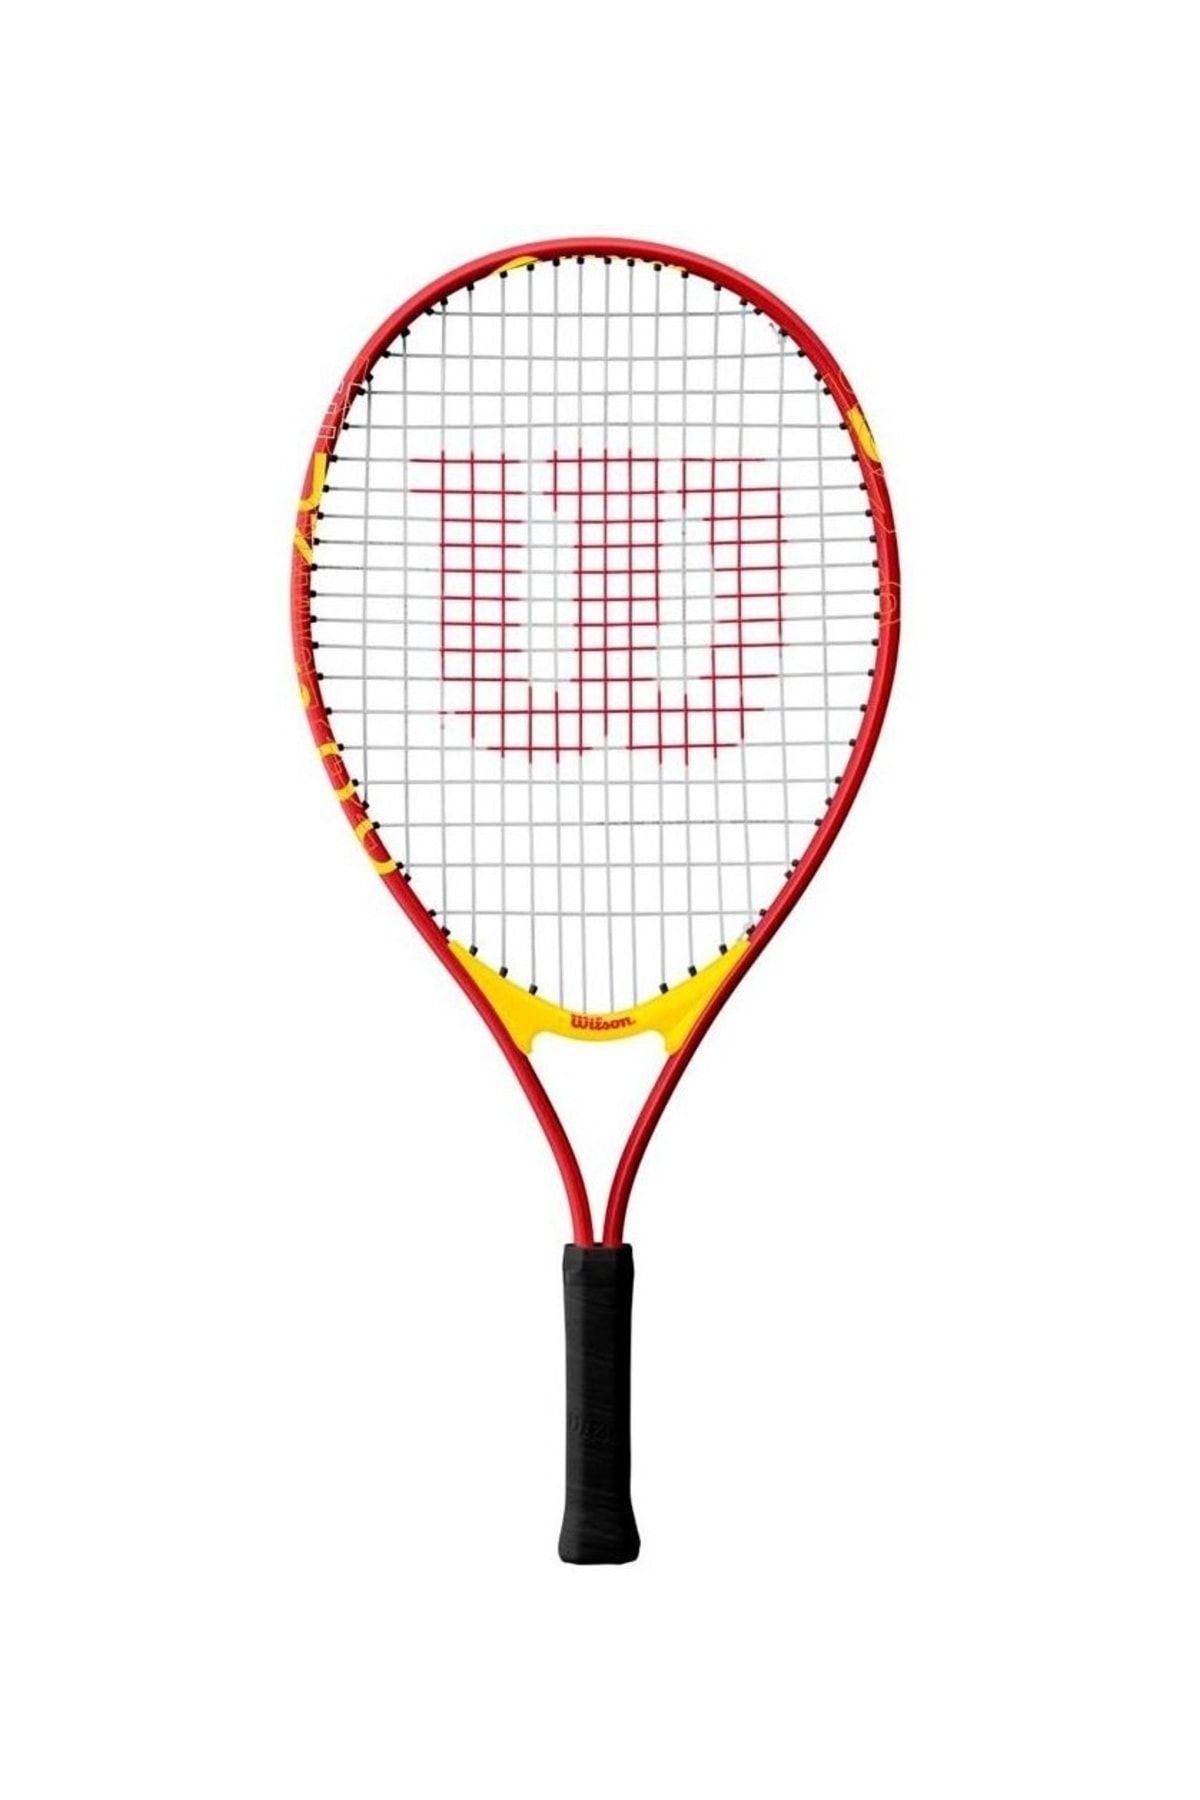 Wilson 16x19 Us Open 23 Çocuk Tenis Raketi Wr082510 Kırmızı Kordajlı 95 inch 200 gr 23 inch